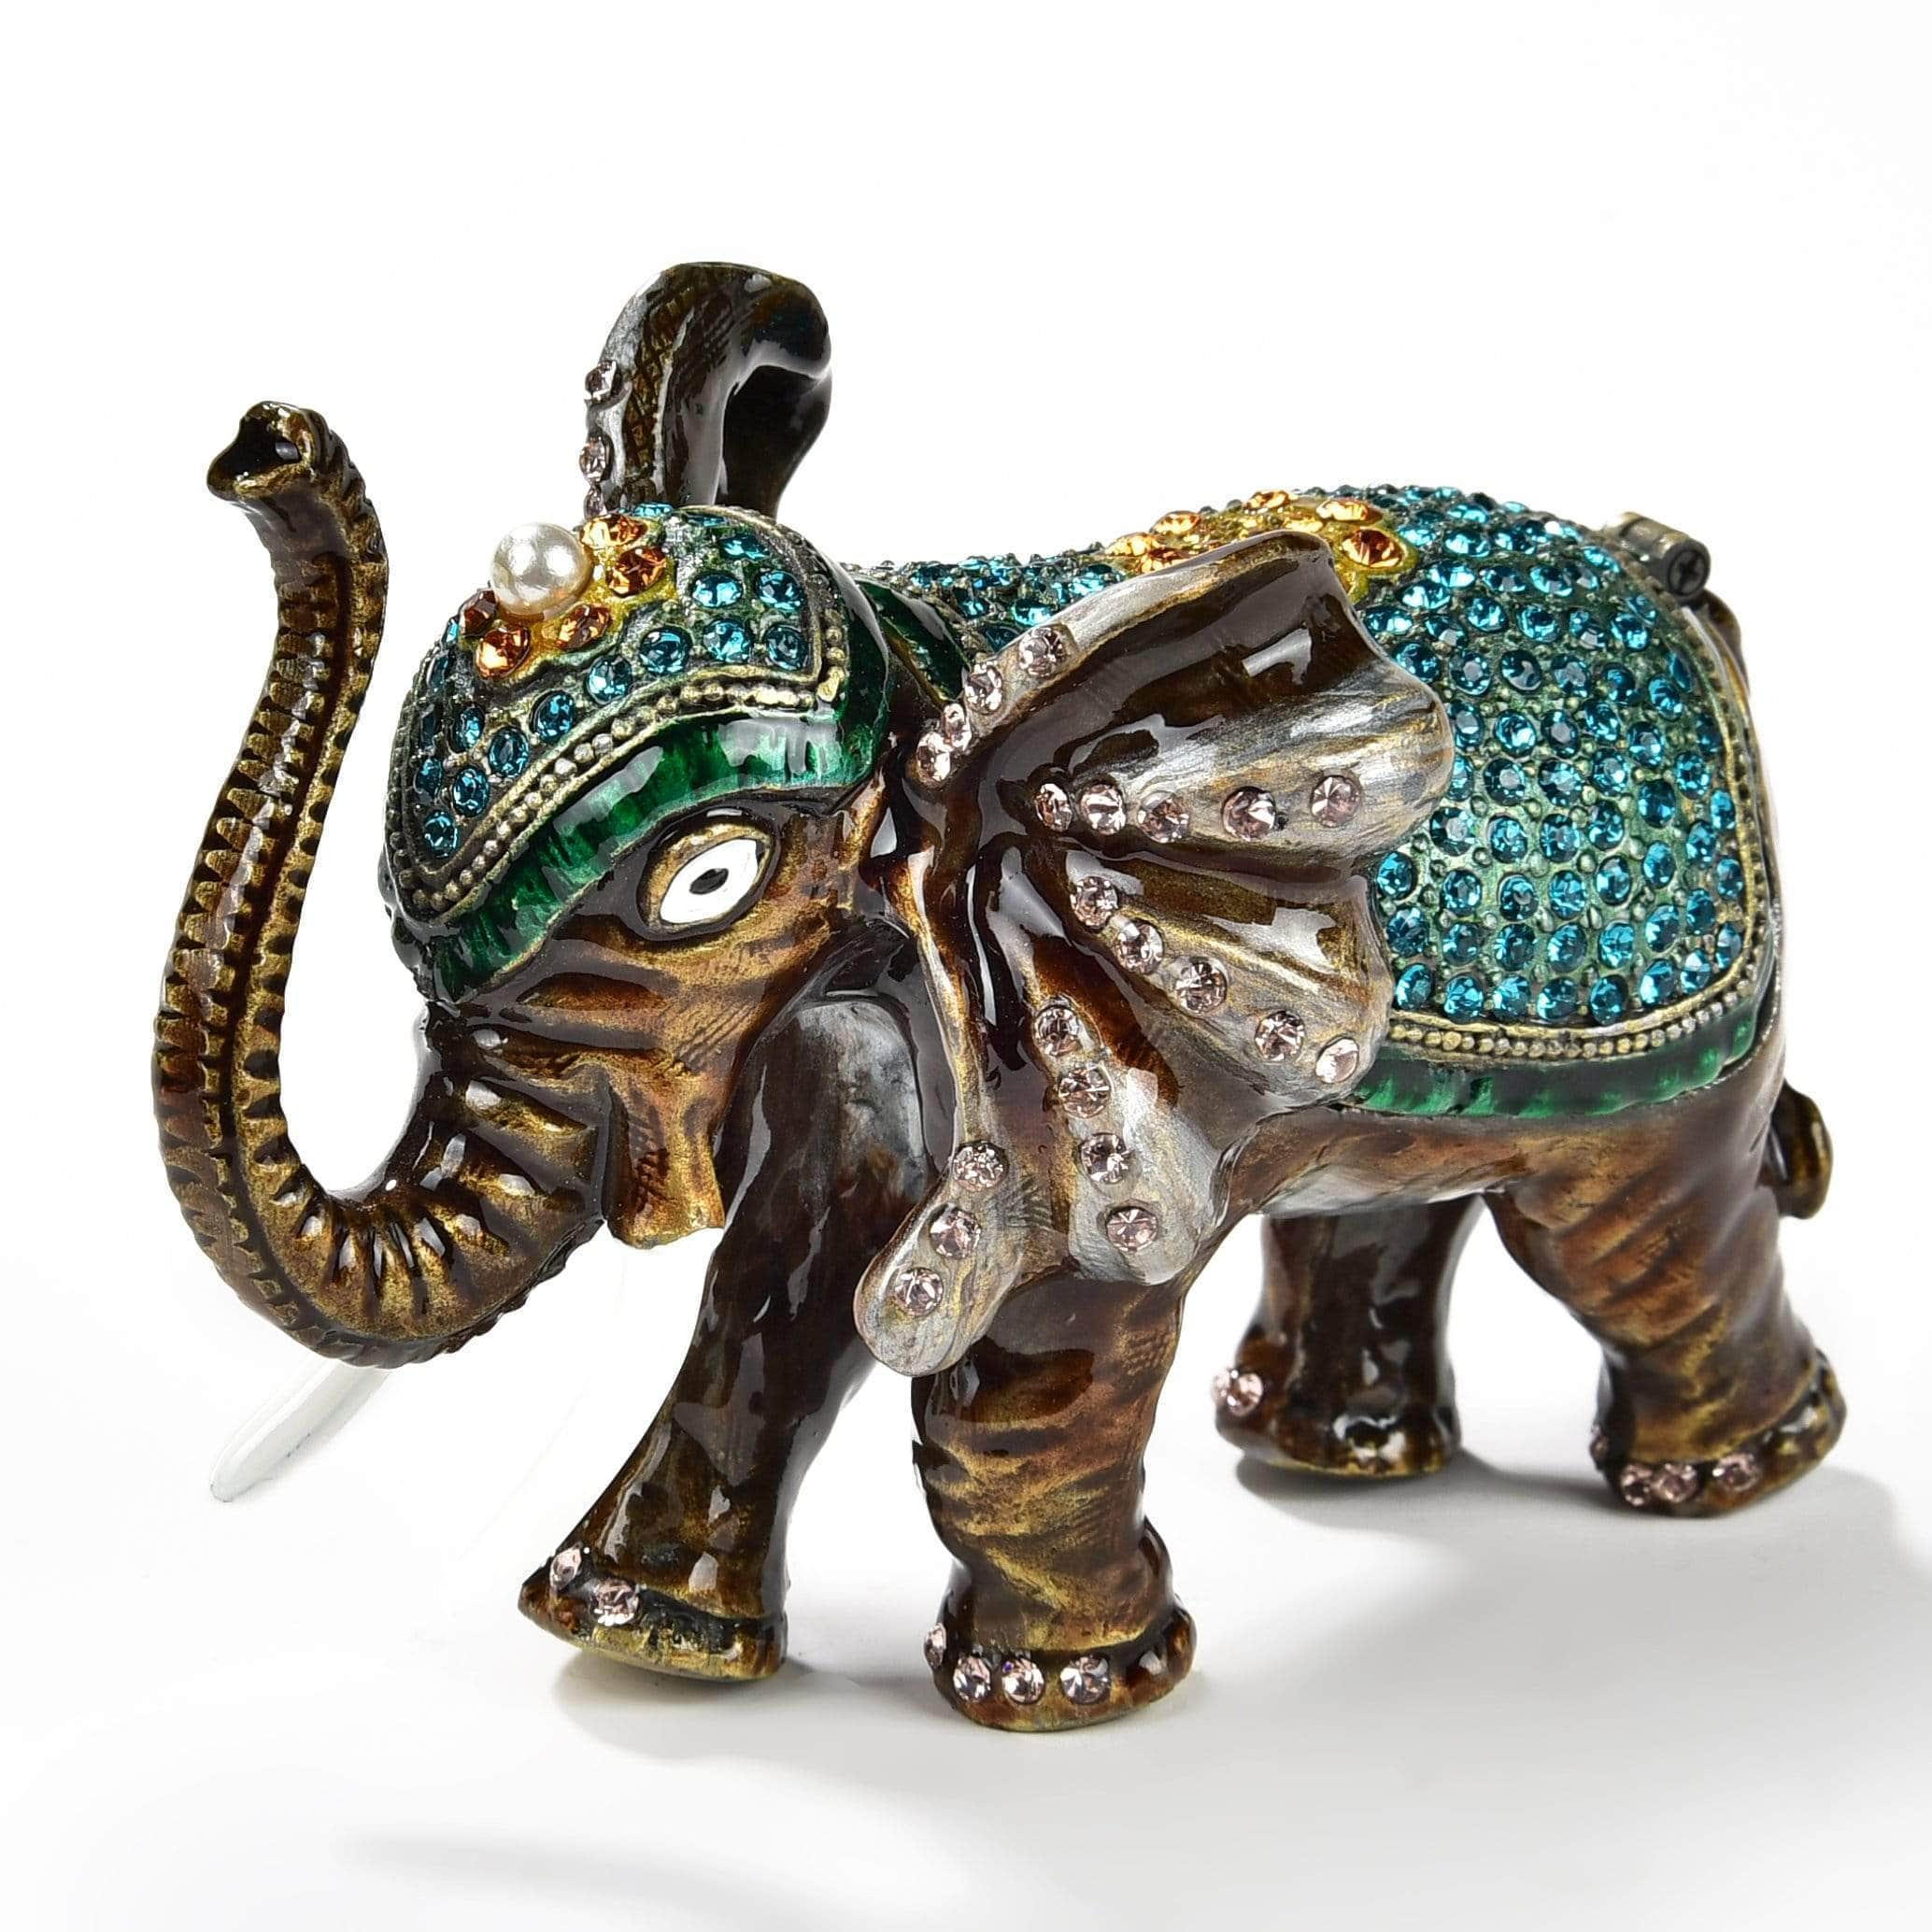 Kalifano Vanity Figurine Aqua Elephant Figurine Keepsake Box made with Crystals SVA-075